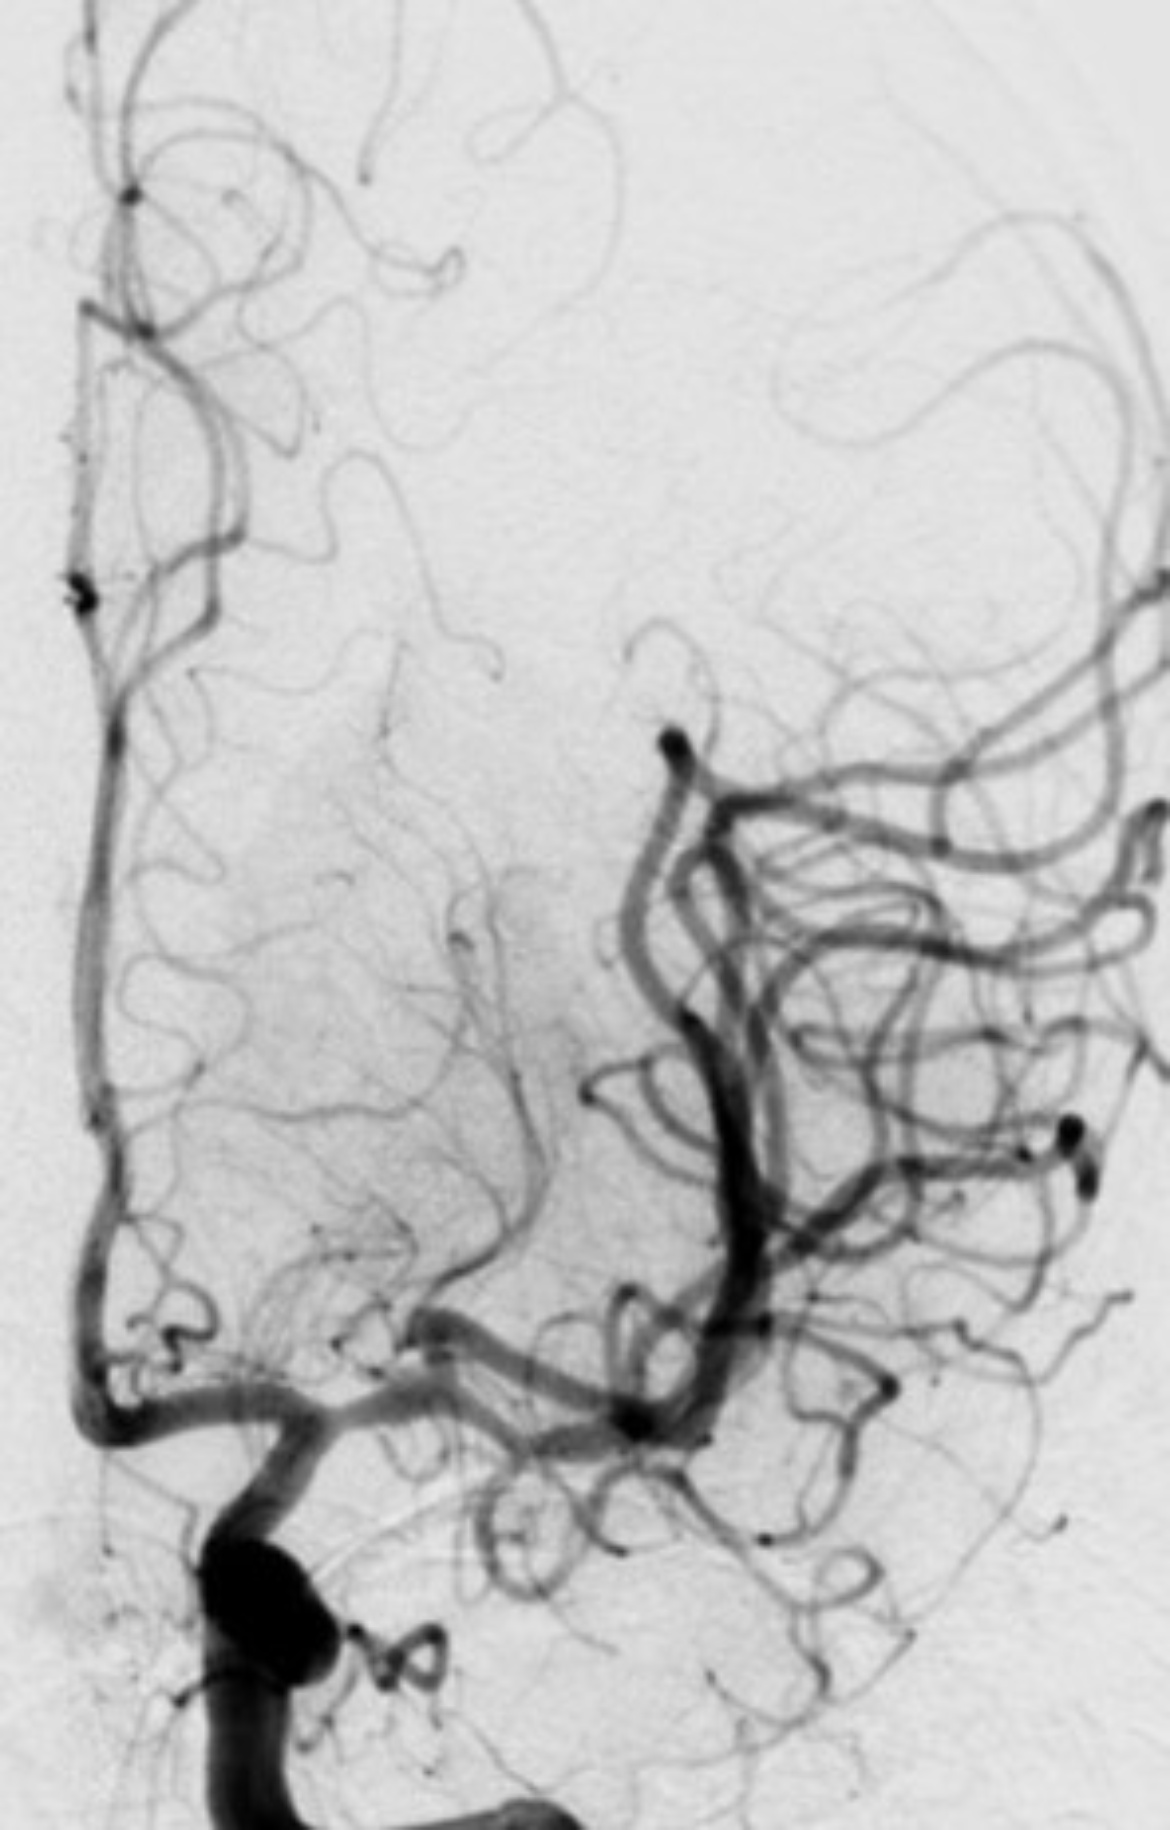 Brain vessel anatomy on contrast enhanced fluoroscopy